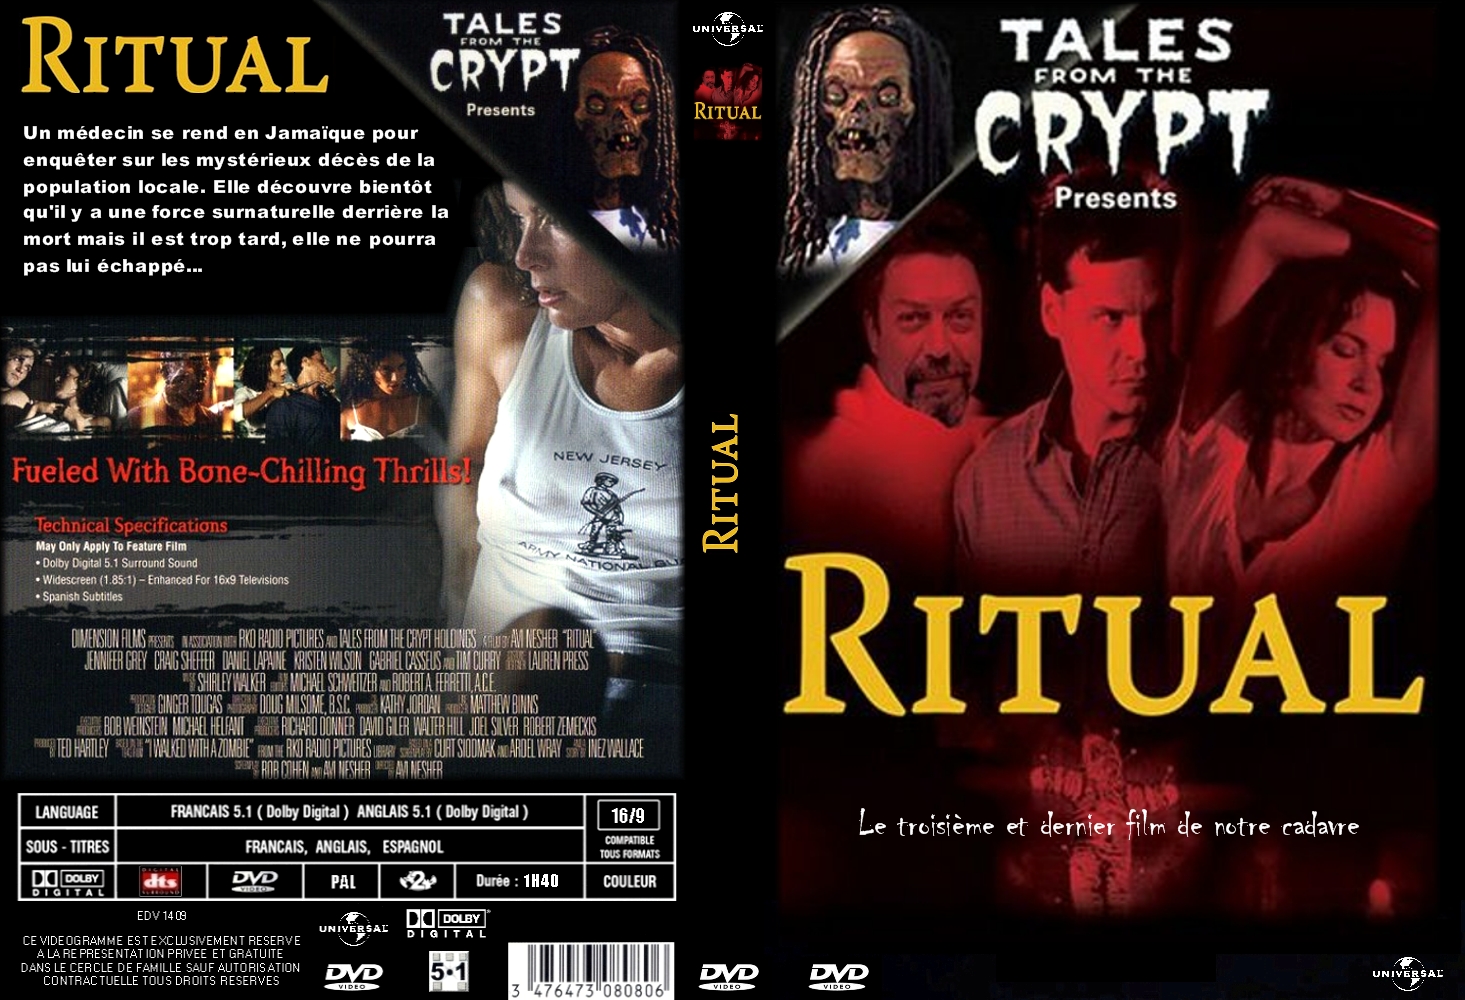 Jaquette DVD Ritual (les contes de la crypte film 3) custom